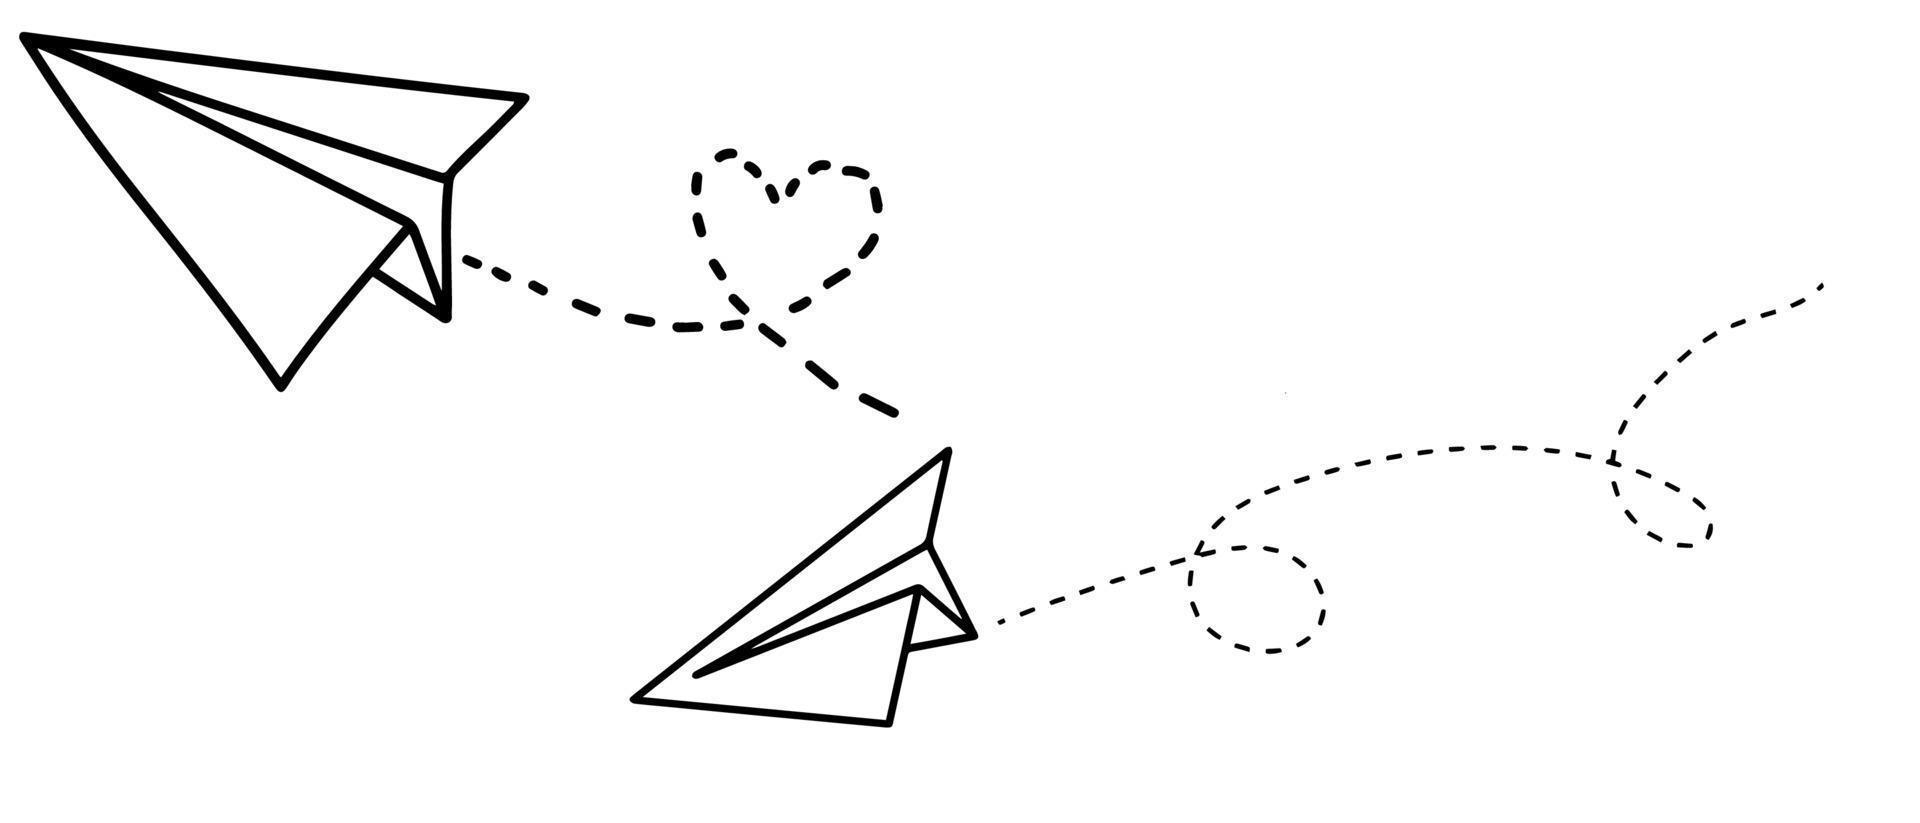 Papierflugzeug-Symbol. handgezeichnetes Papierflugzeug. Vektor-Illustration. vektor